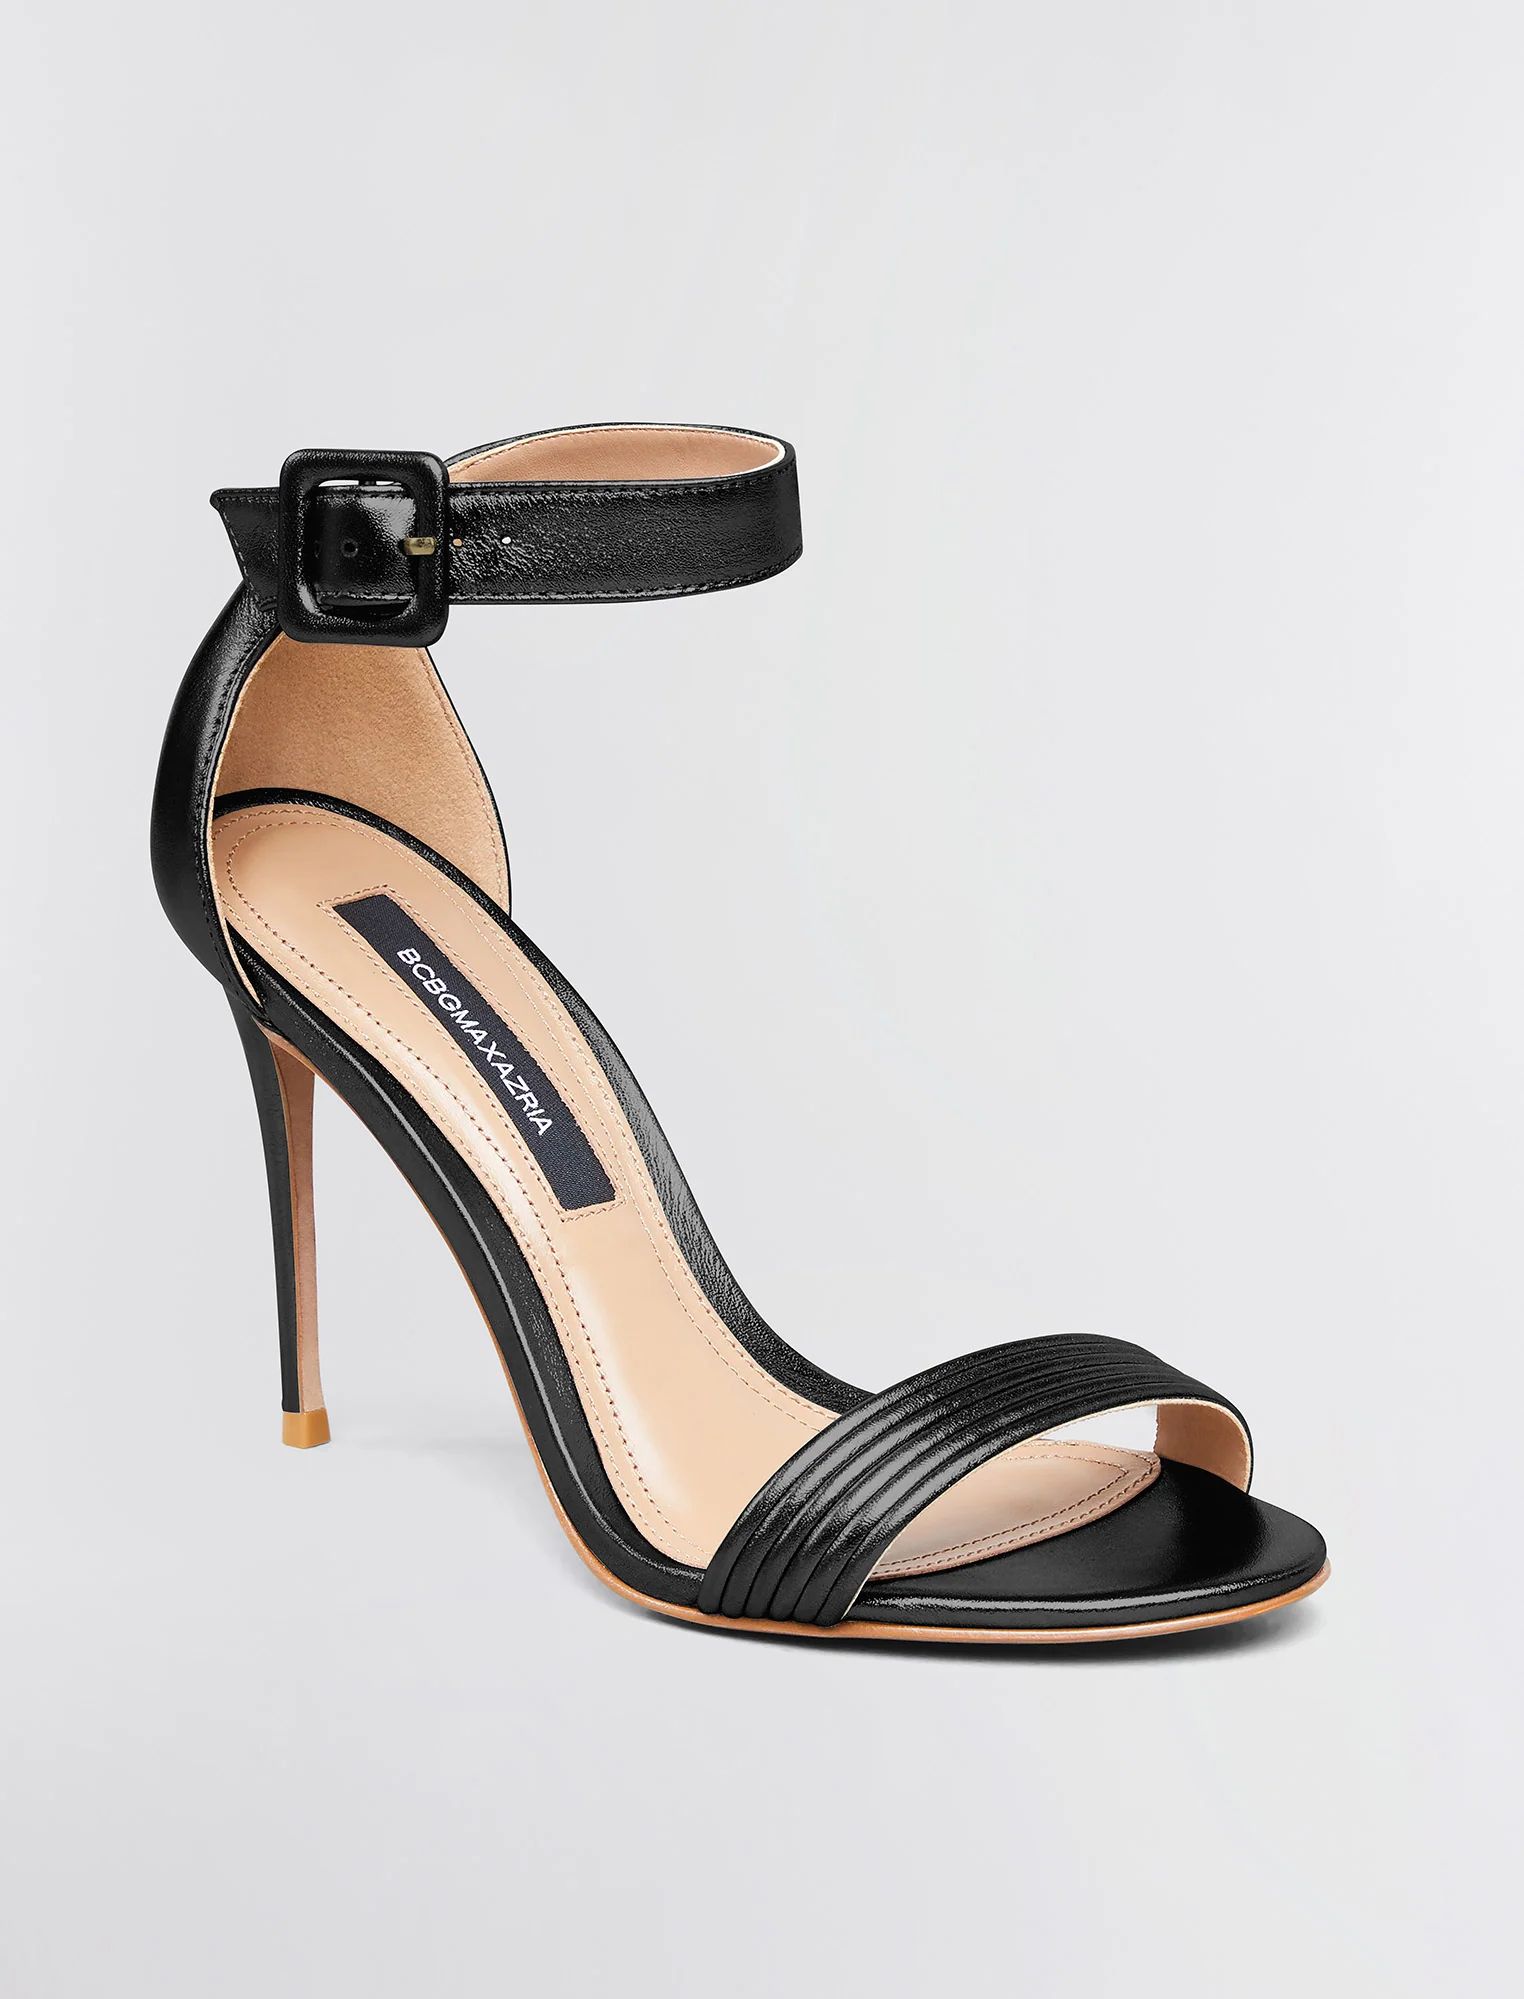 Black Lucy Heel | Shoes | BCBGMAXAZRIA | BCBG Max Azria 